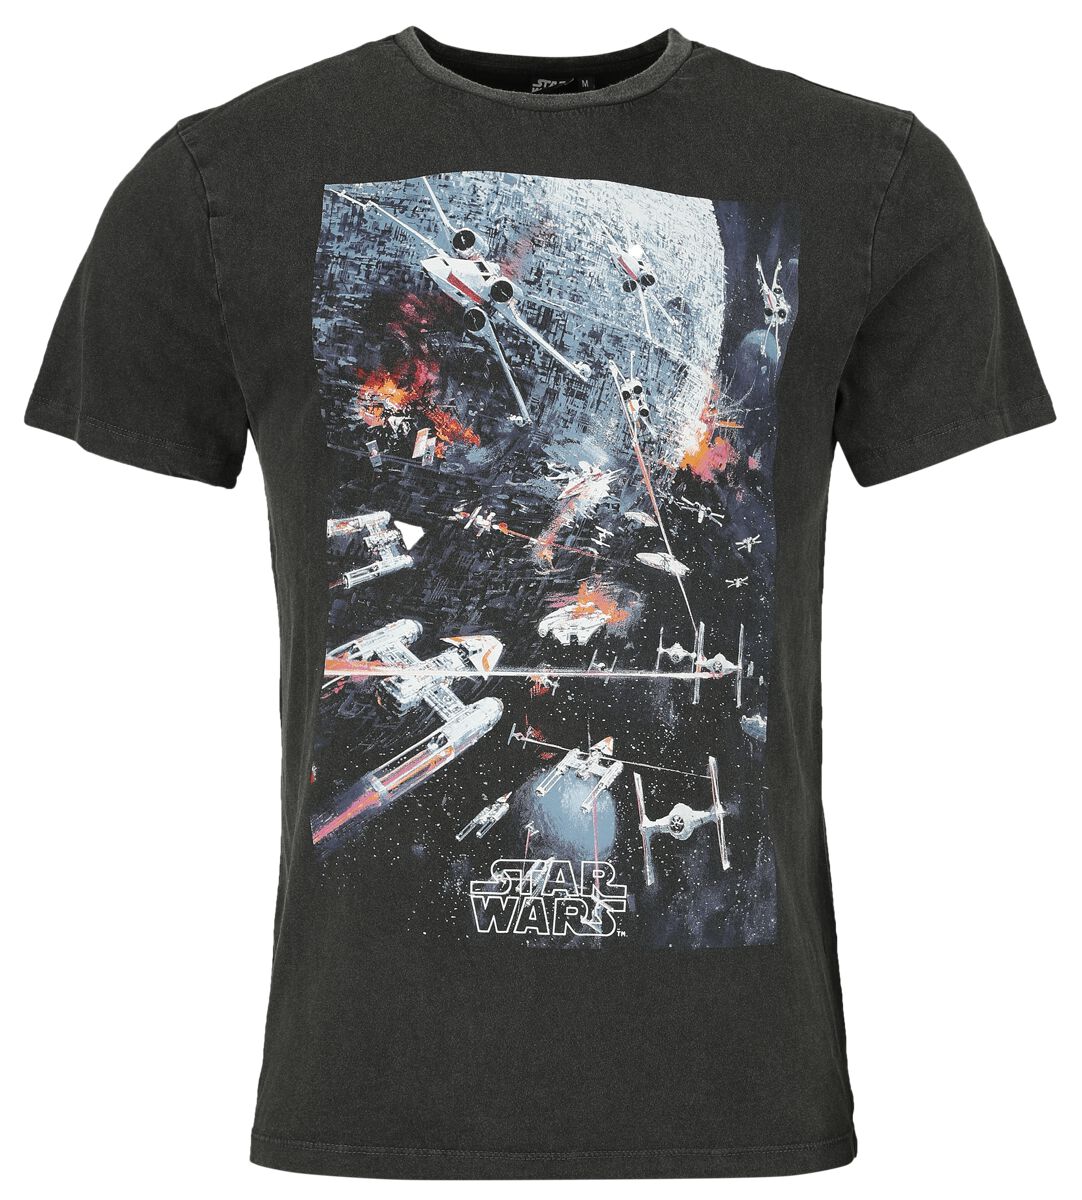 Star Wars Classic - Space War T-Shirt schwarz in L